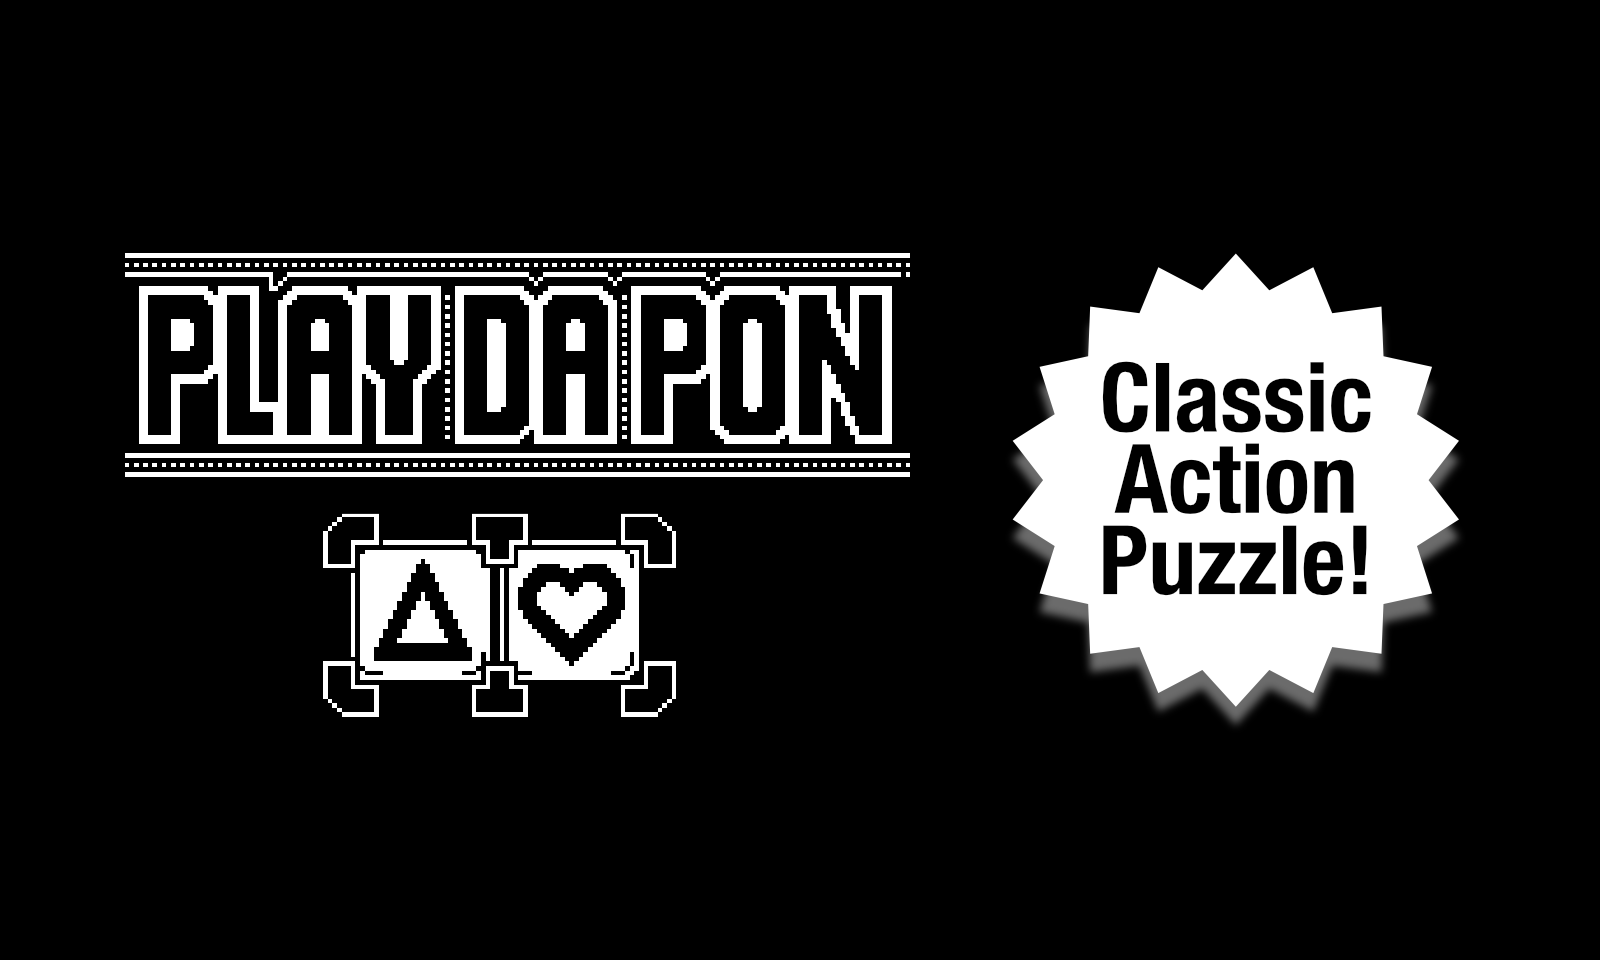 PlayDaPon